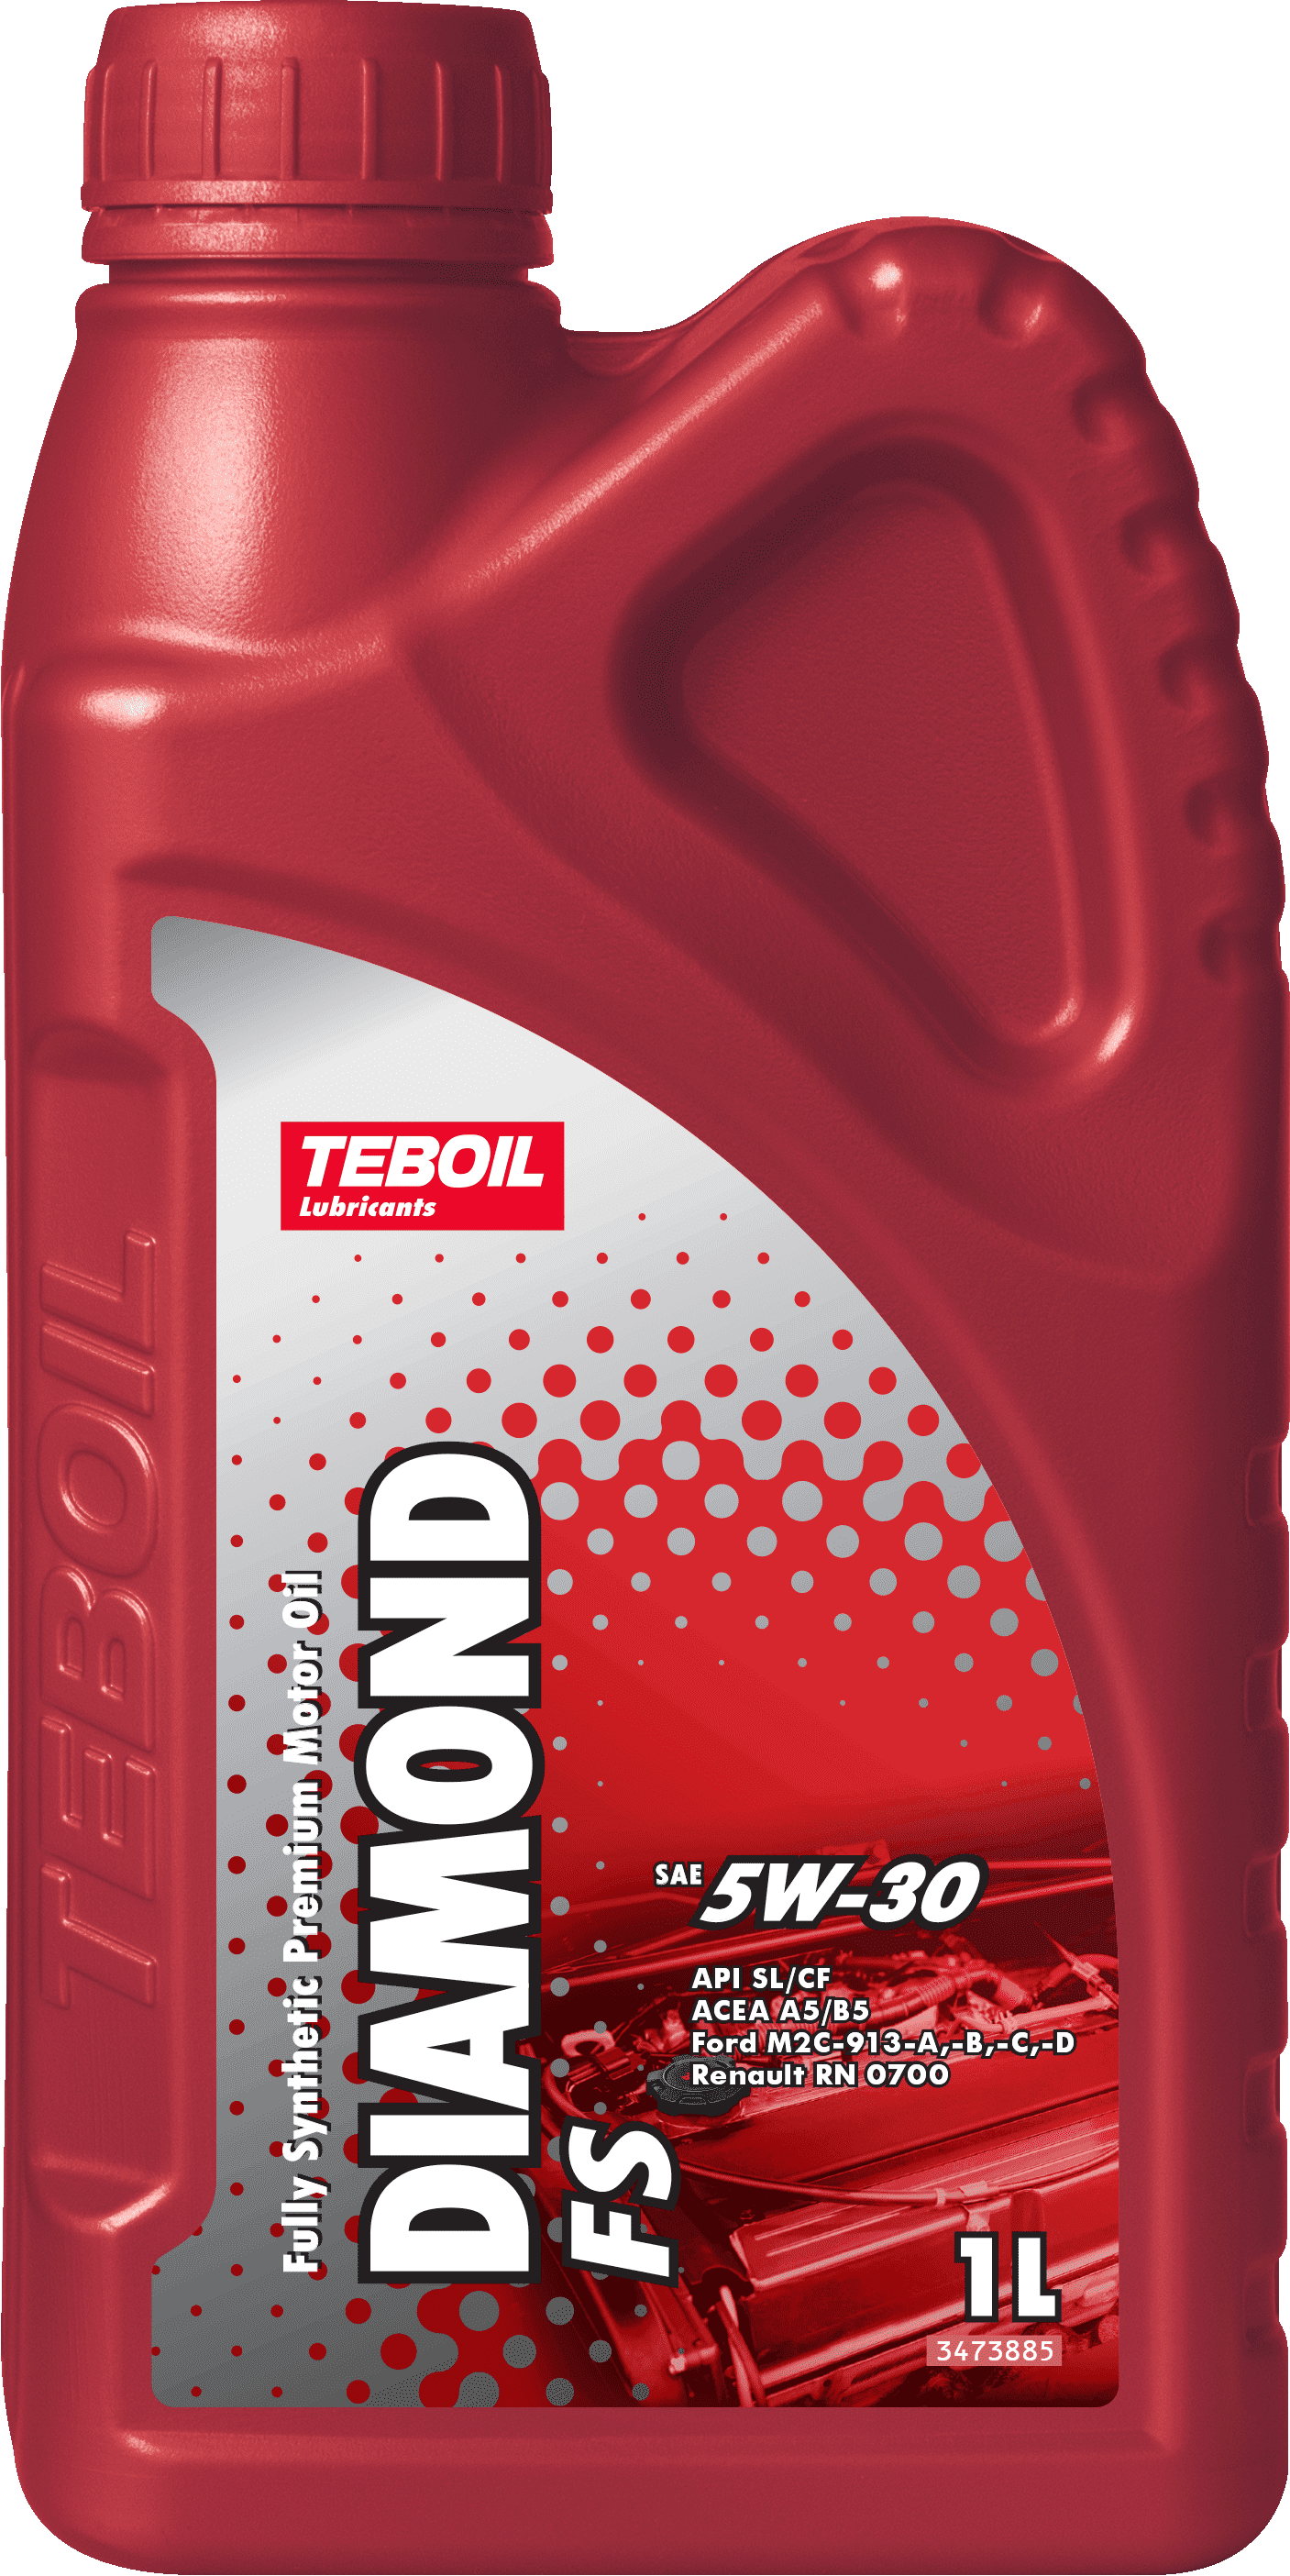 Синтетическое моторное масло TEBOIL DIAMOND FS 5W-30